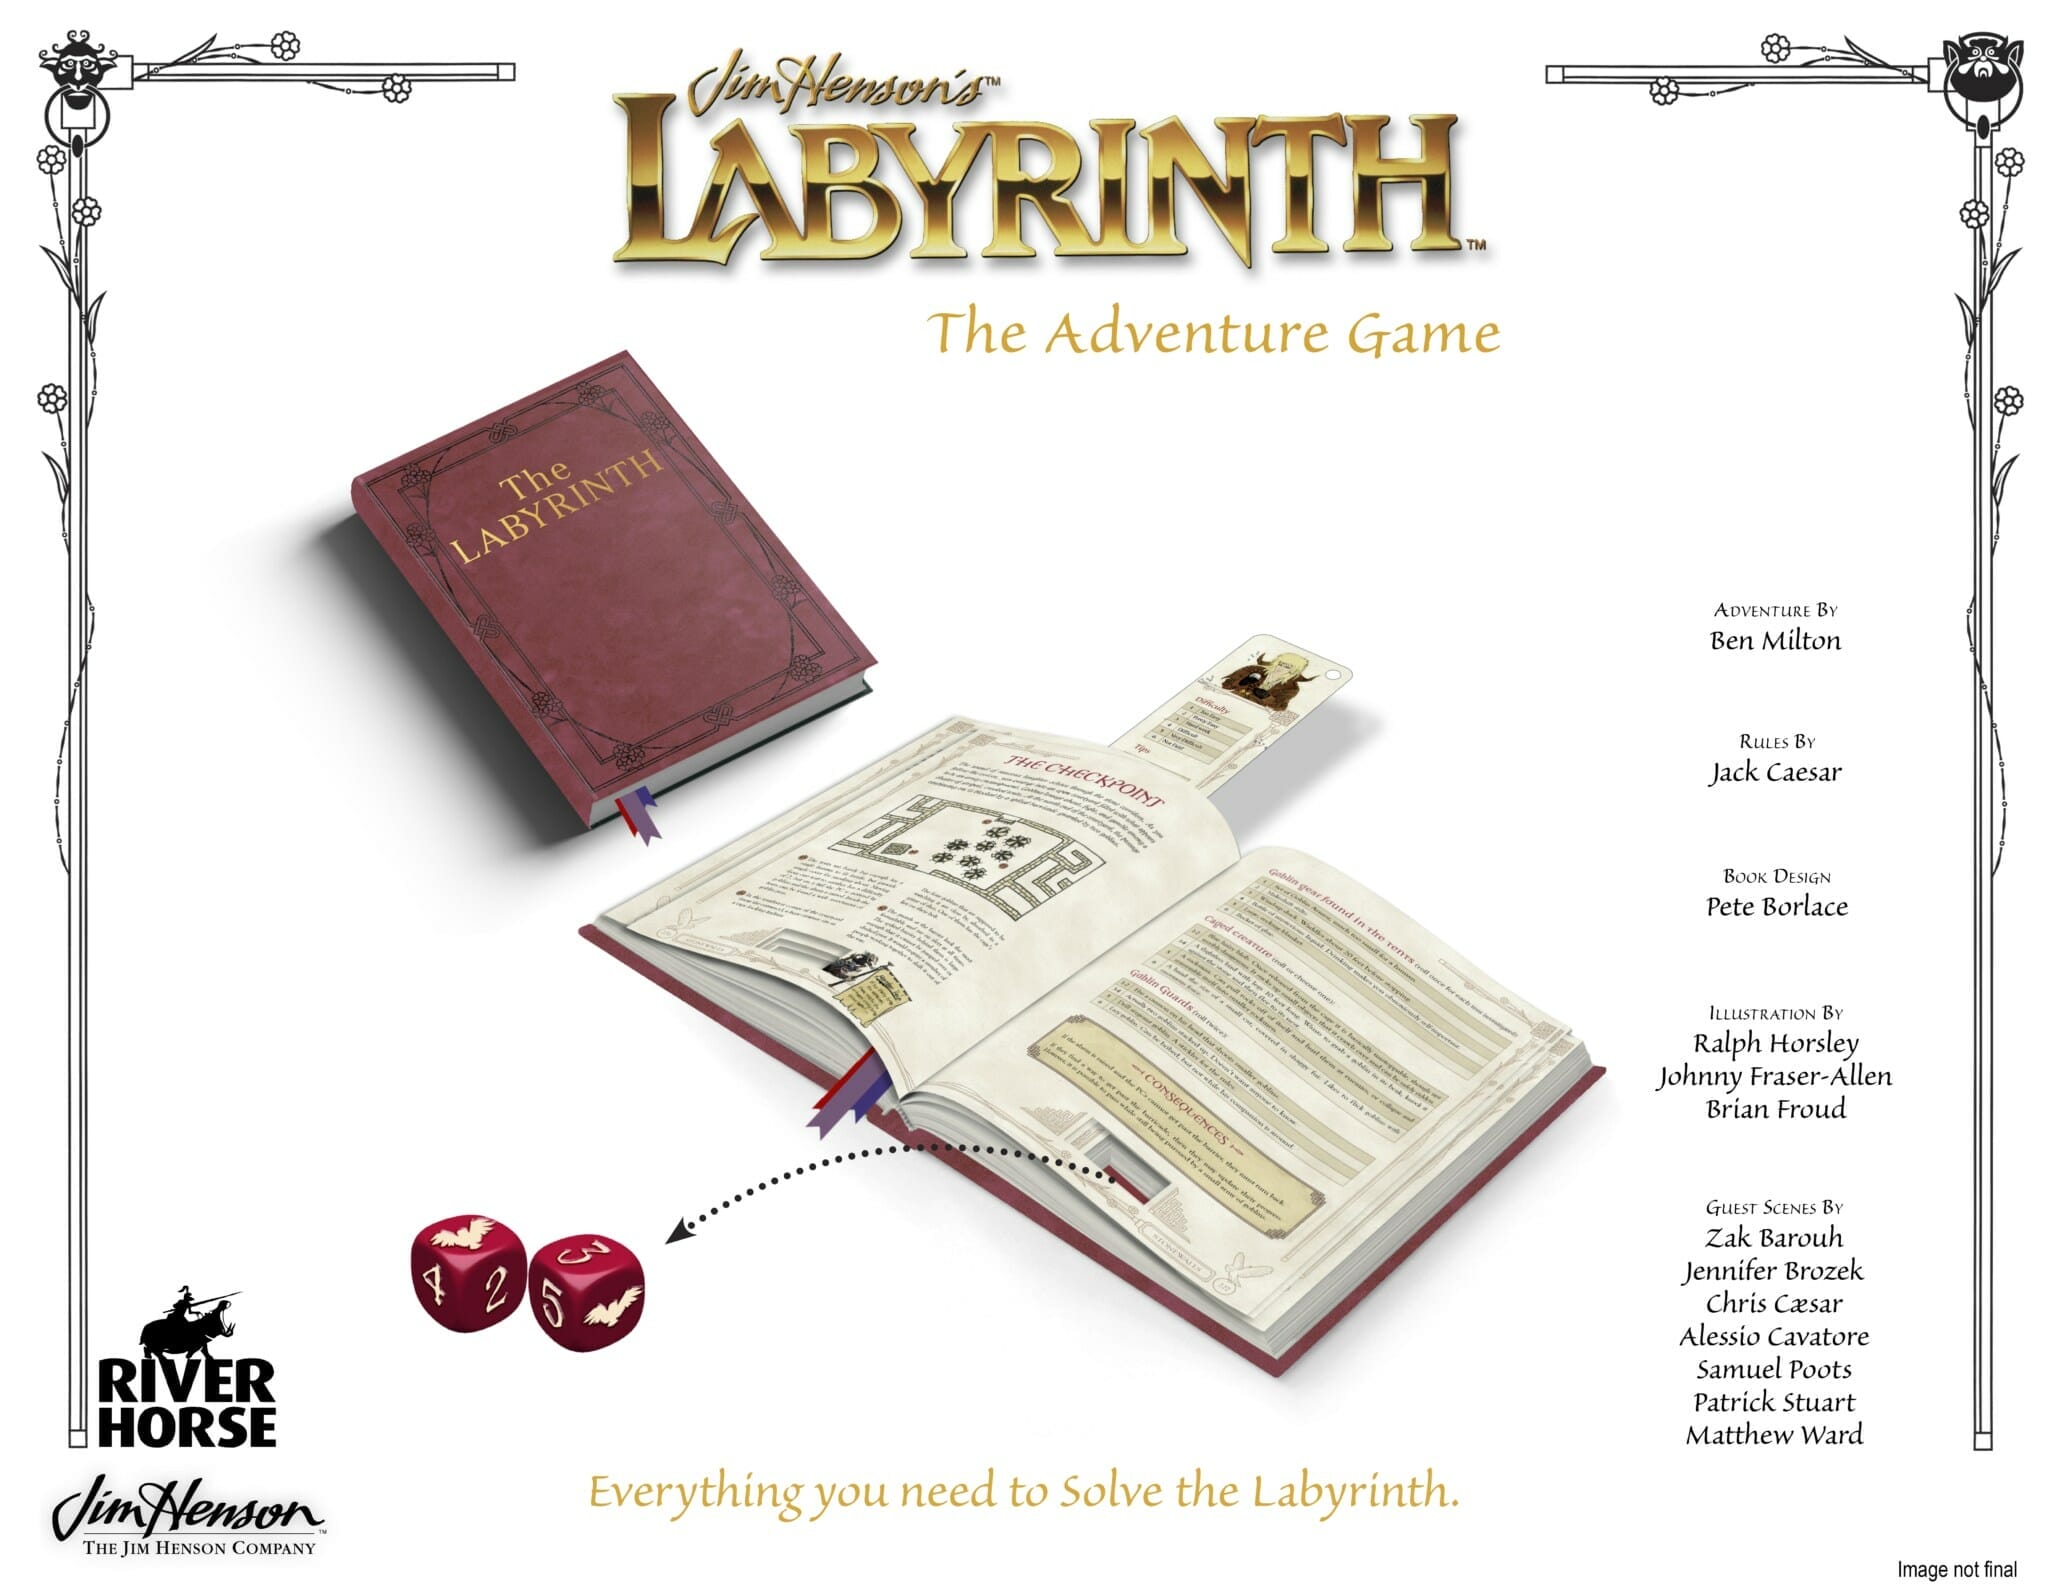 Jim Henson's Labyrinth adventure game